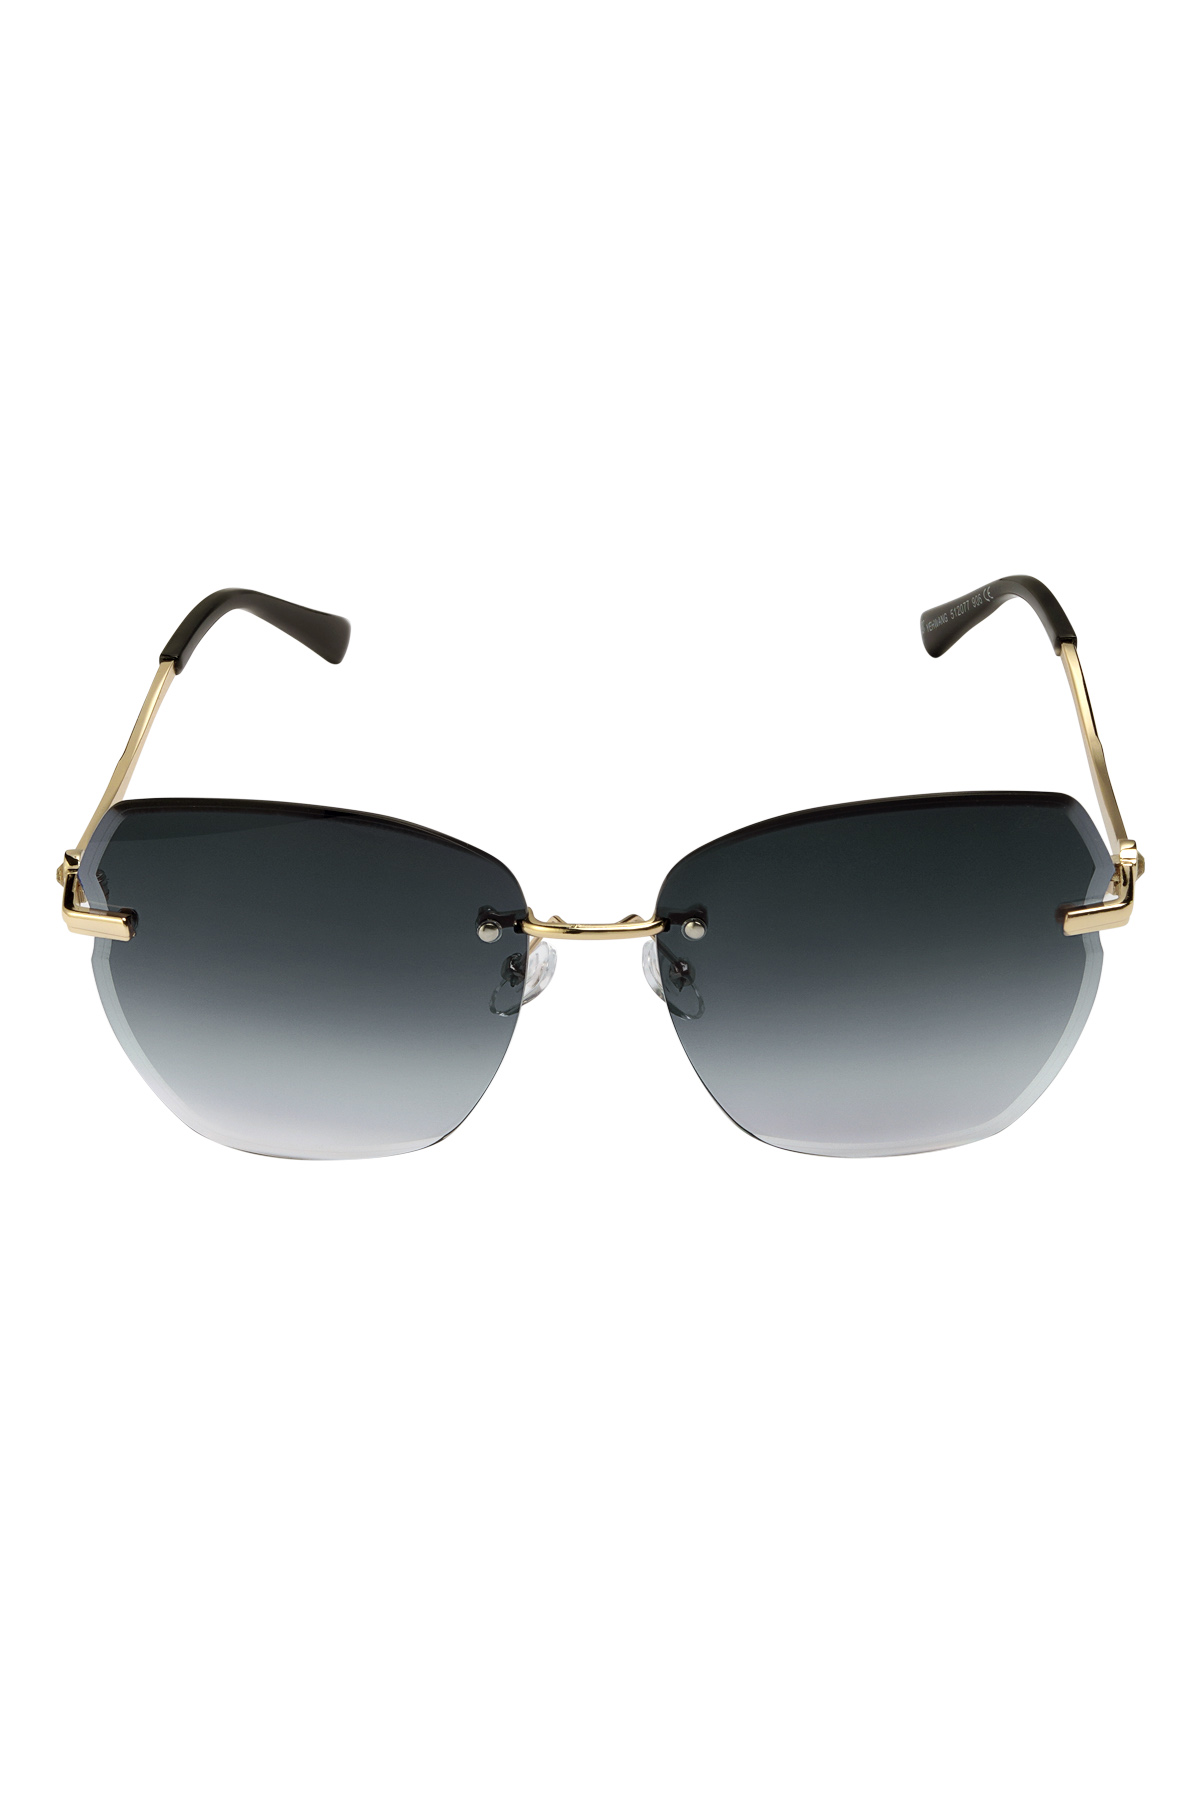 Statement sunglasses gold hardware - gray Picture5